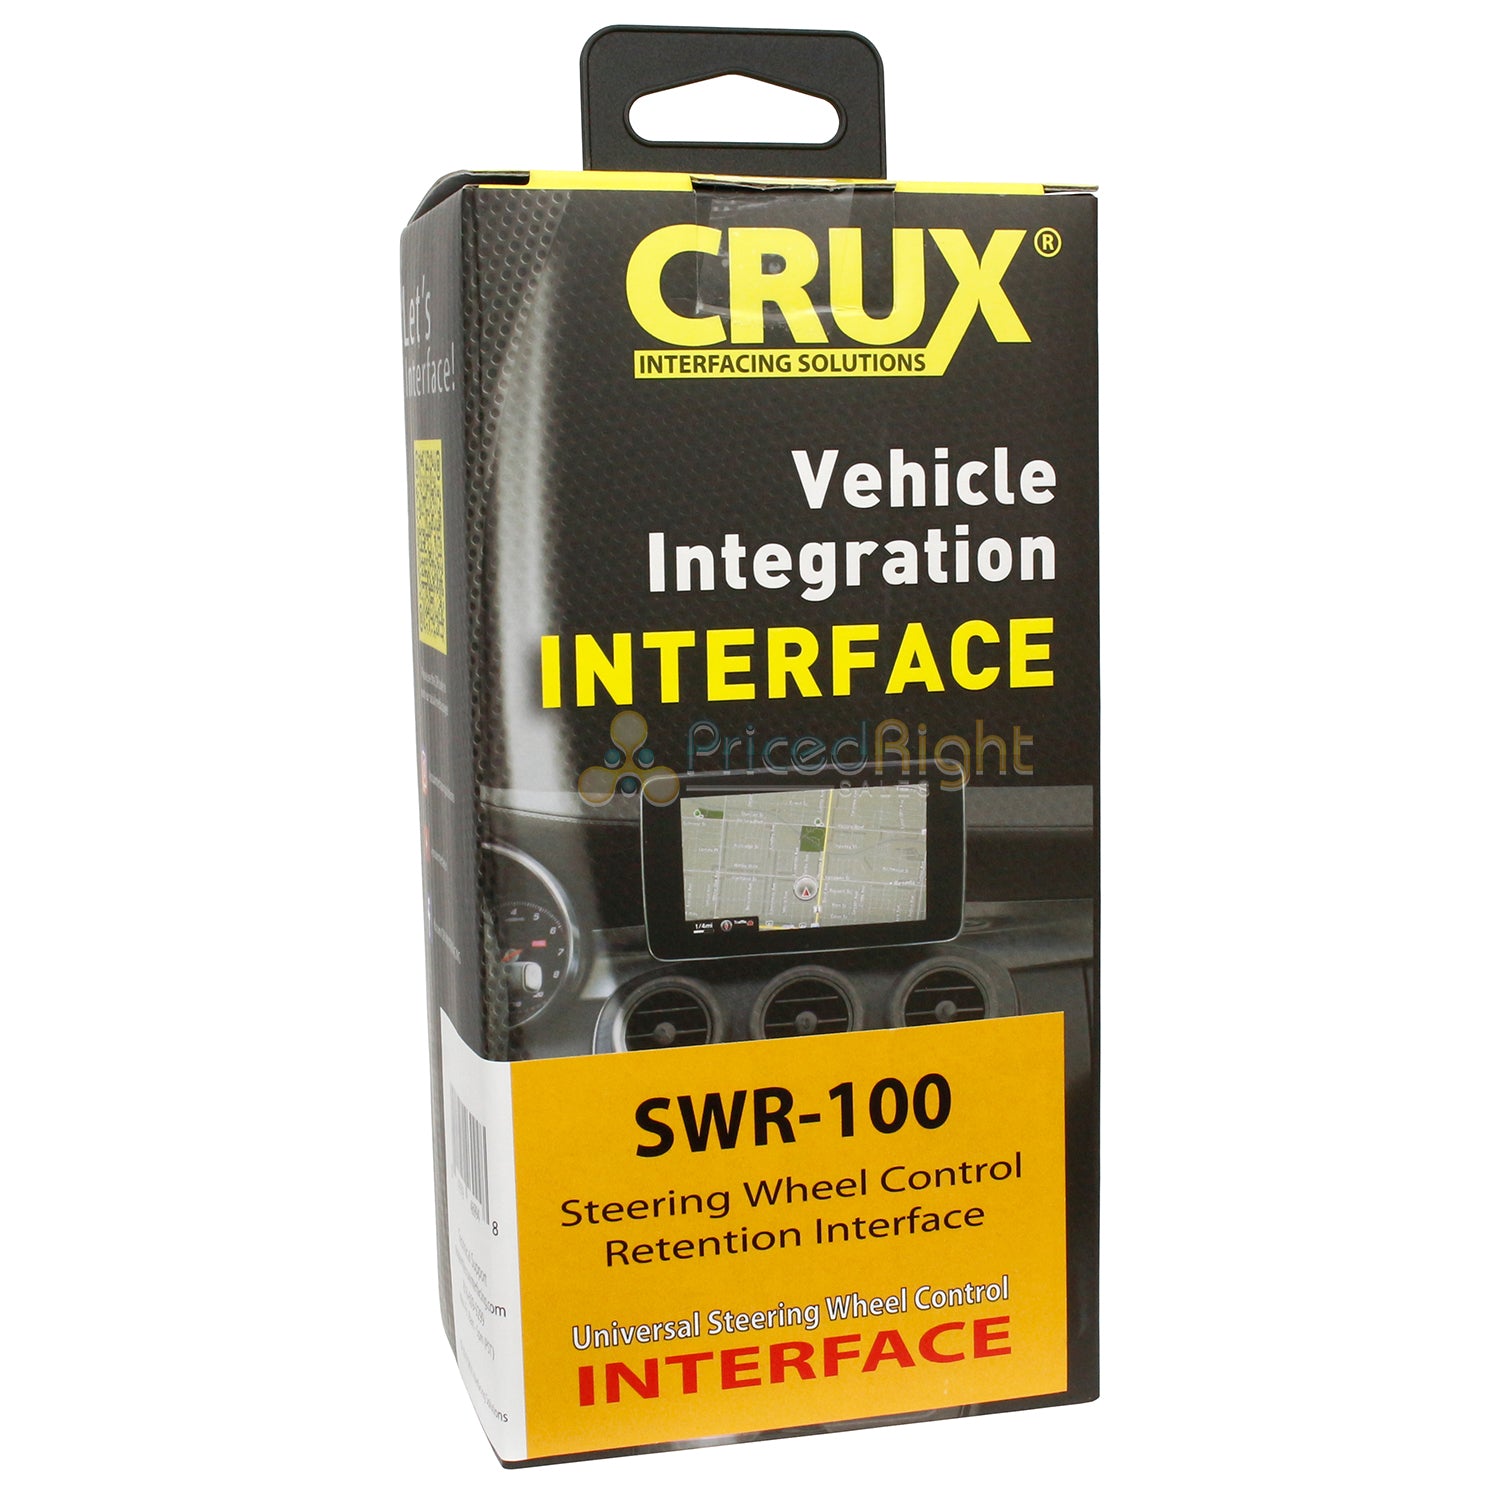 Crux Universal Steering Wheel Control Retention Interface No Programming SWR-100